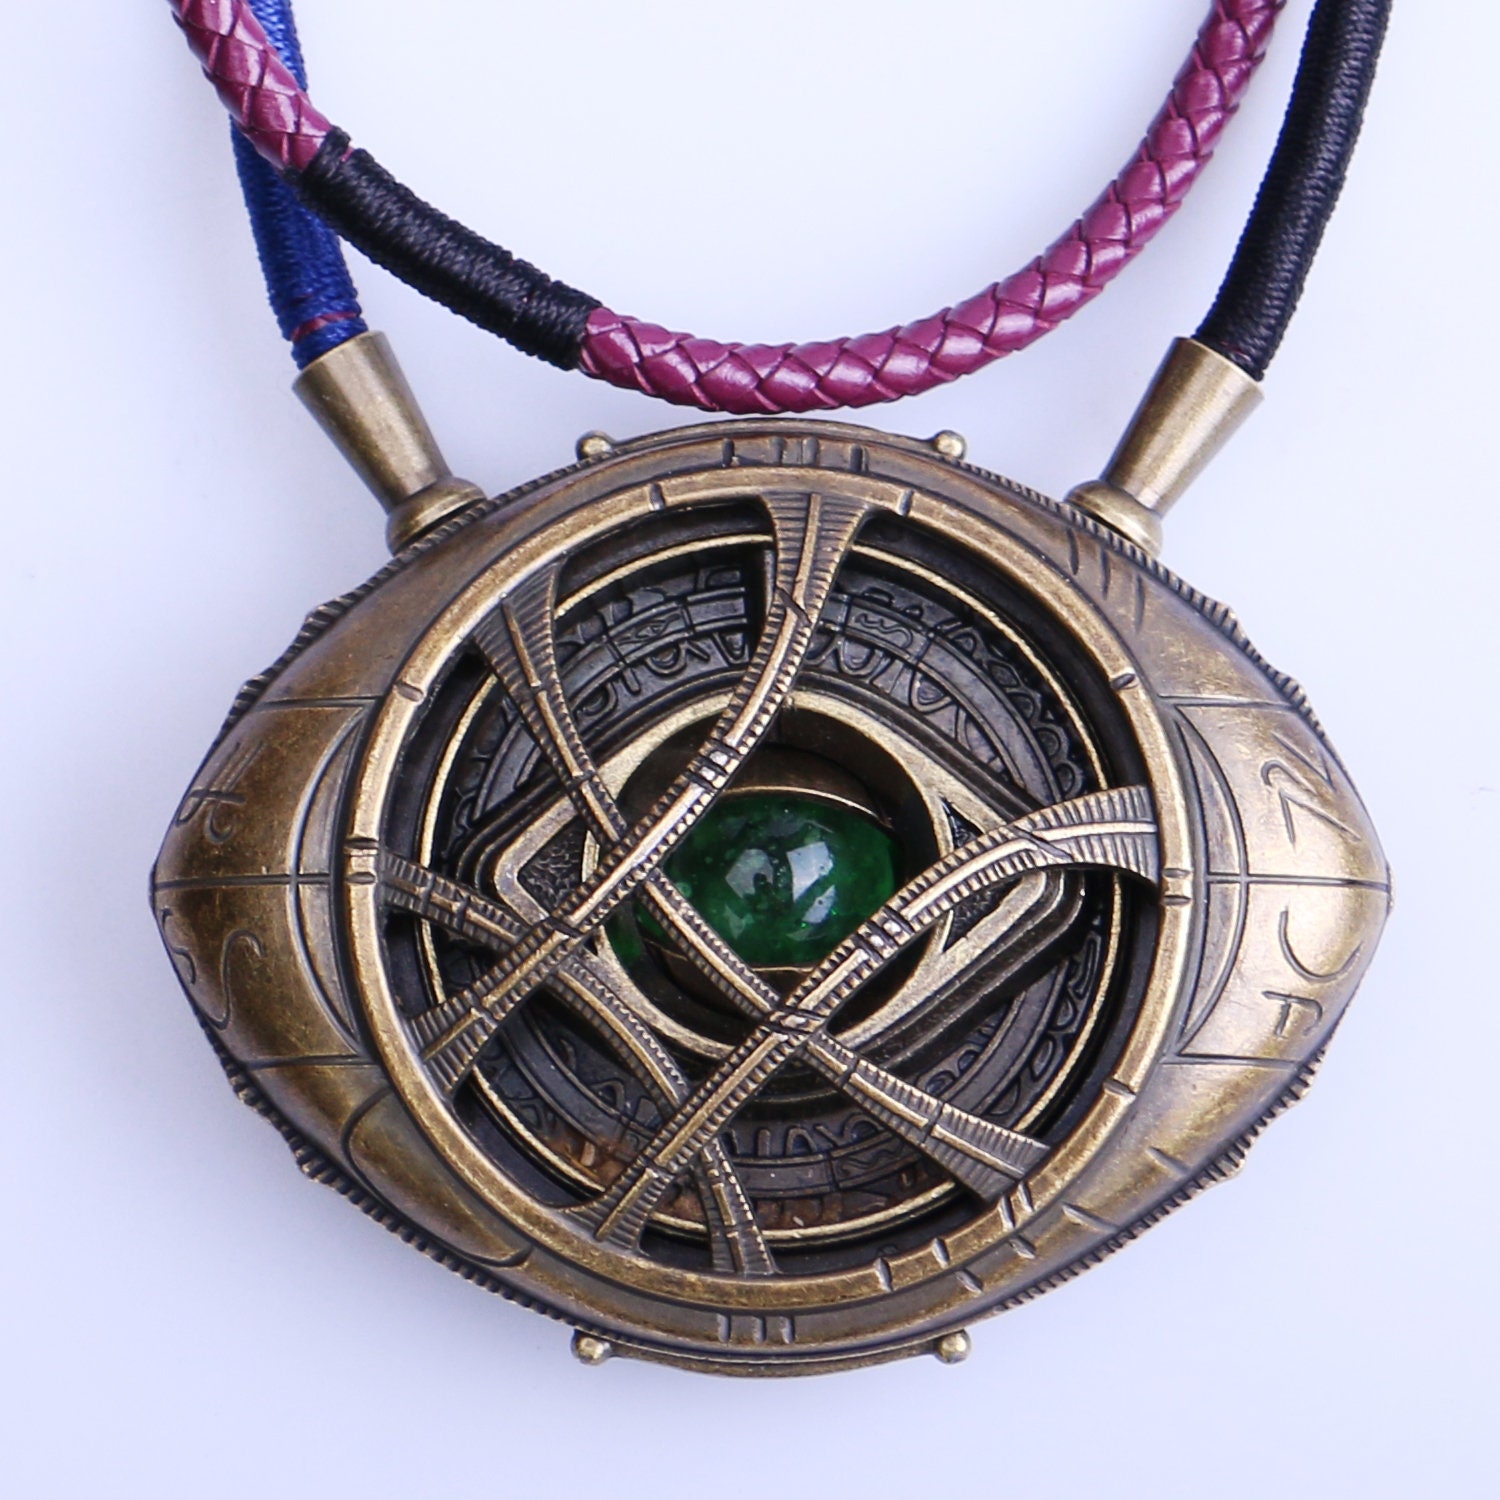 Antique Luminous Doctor Strange Agamotto Eye Pendant Necklace Jewelry Gift